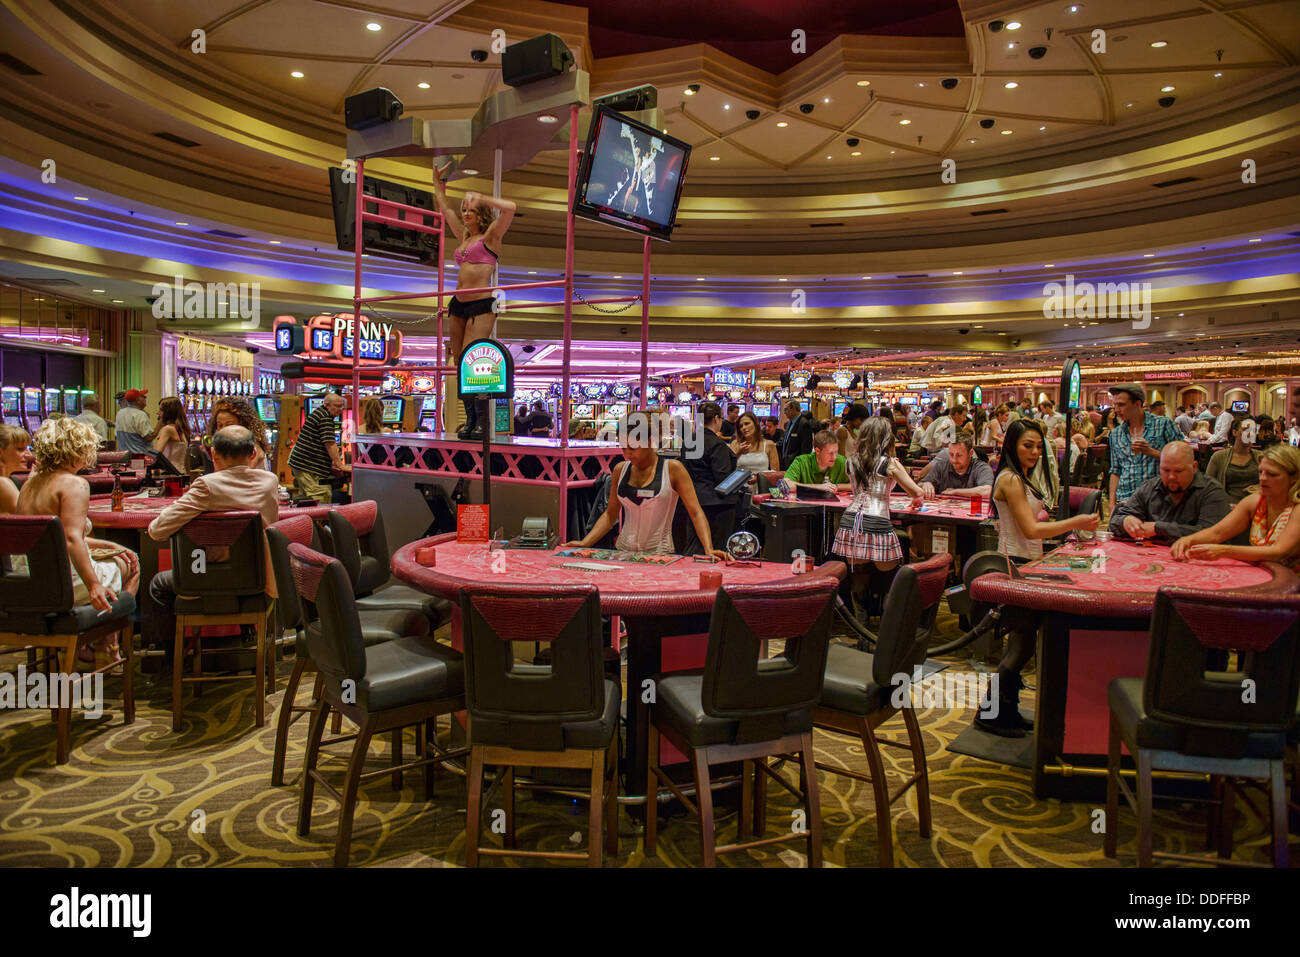 A casino floor in Las Vegas Stock Photo - Alamy